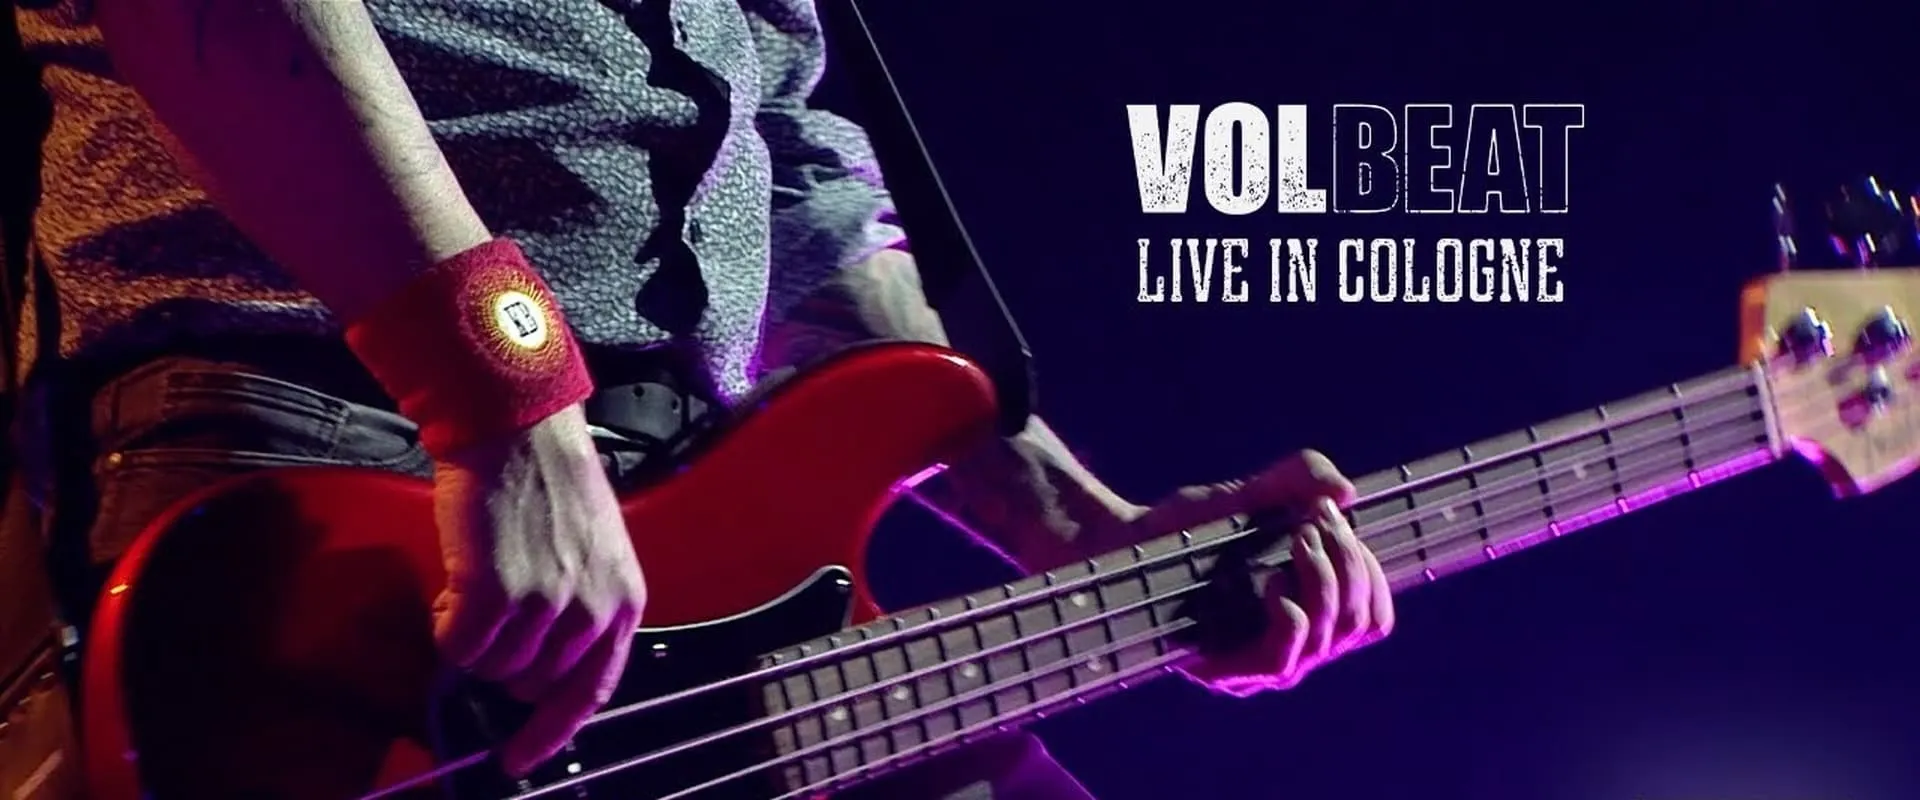 Volbeat - Live in Cologne (2020)